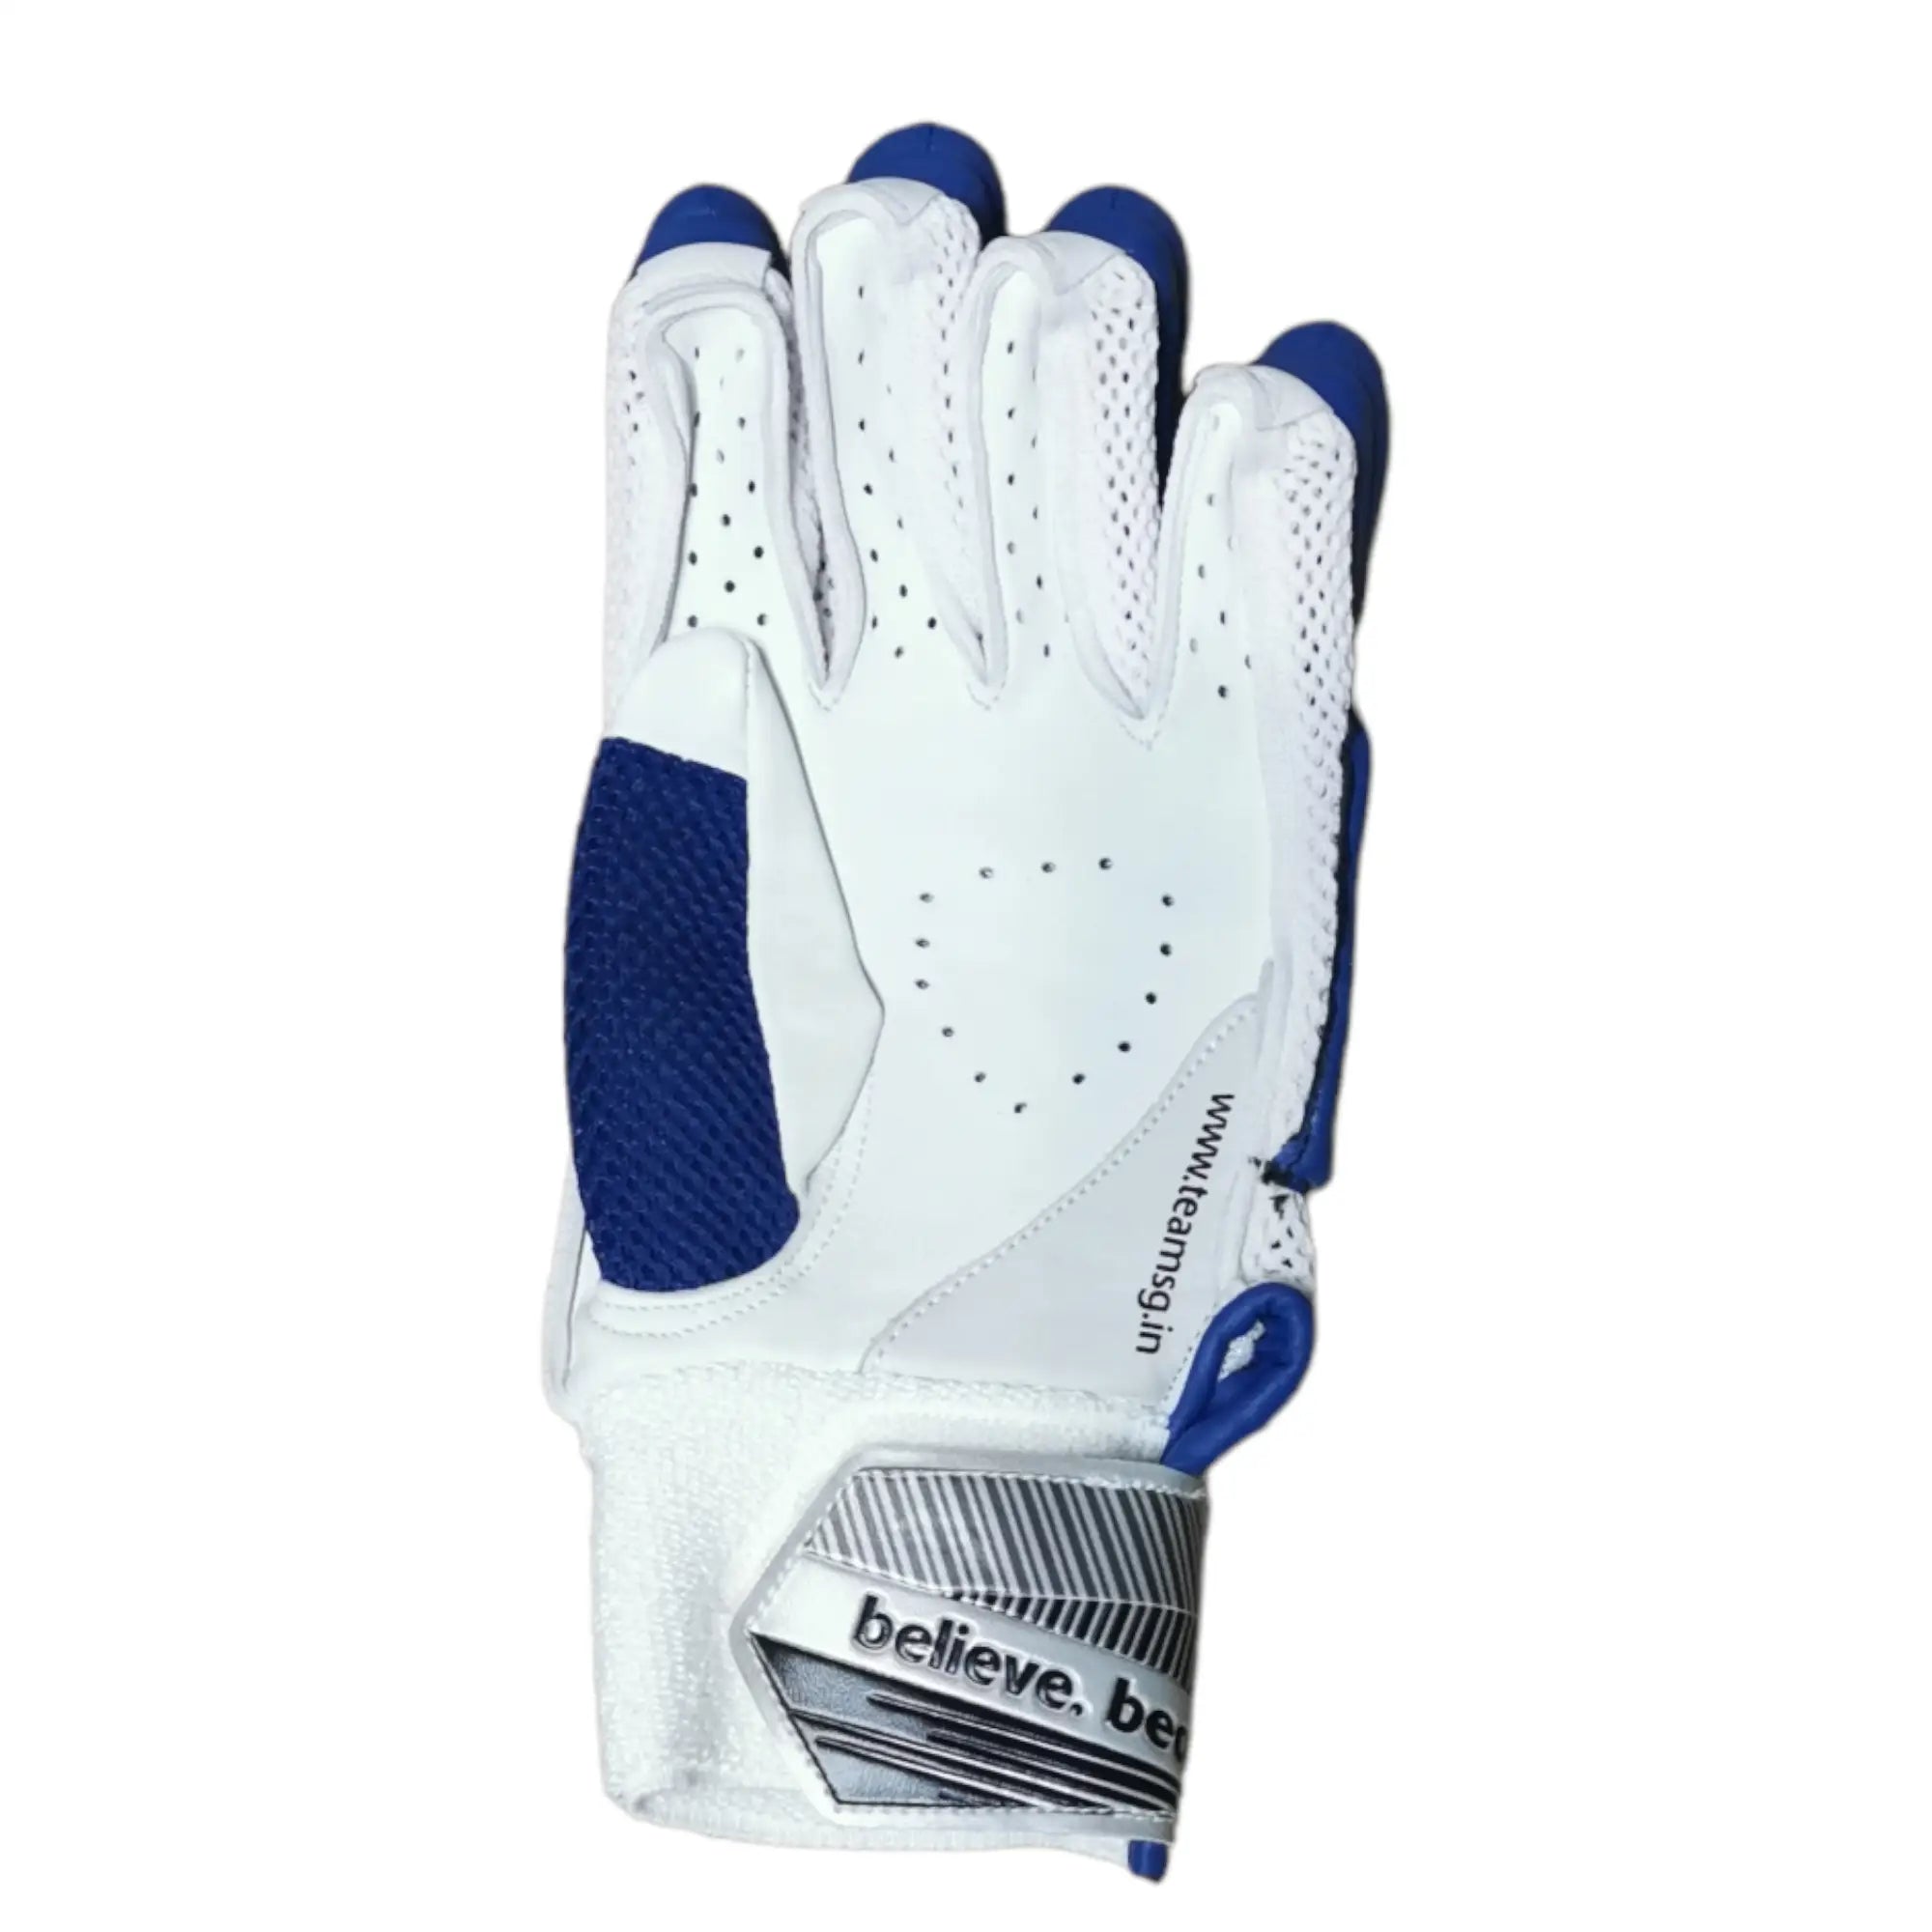 SG Test Blue Batting Gloves - GLOVE - BATTING